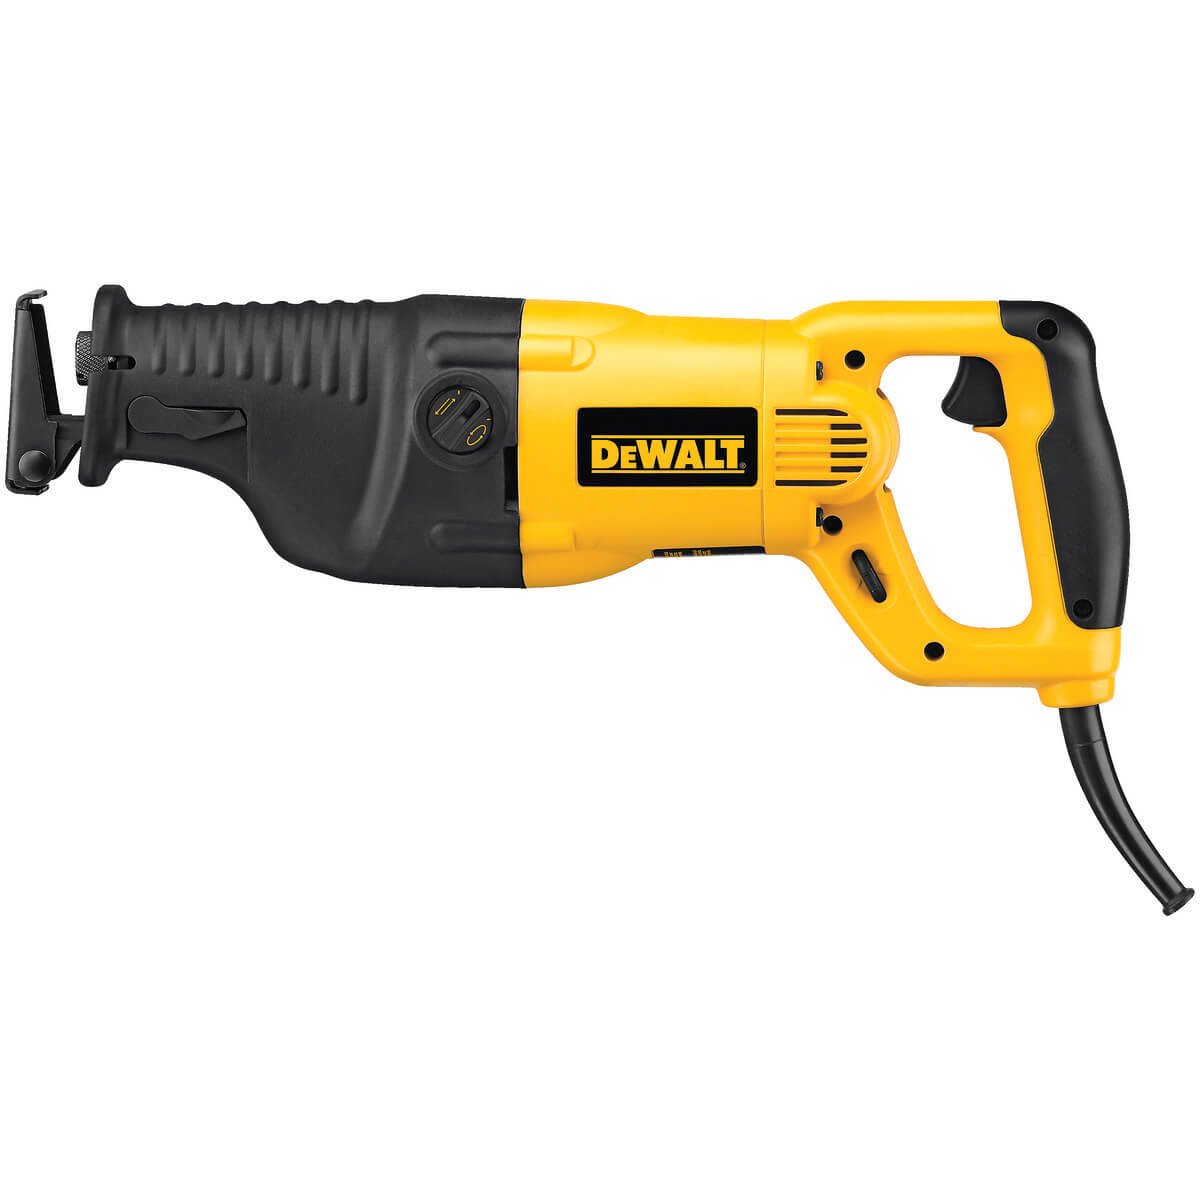 DEWALT DW311K - 13amp 1-1/8" Stroke Reciprocating Saw Kit